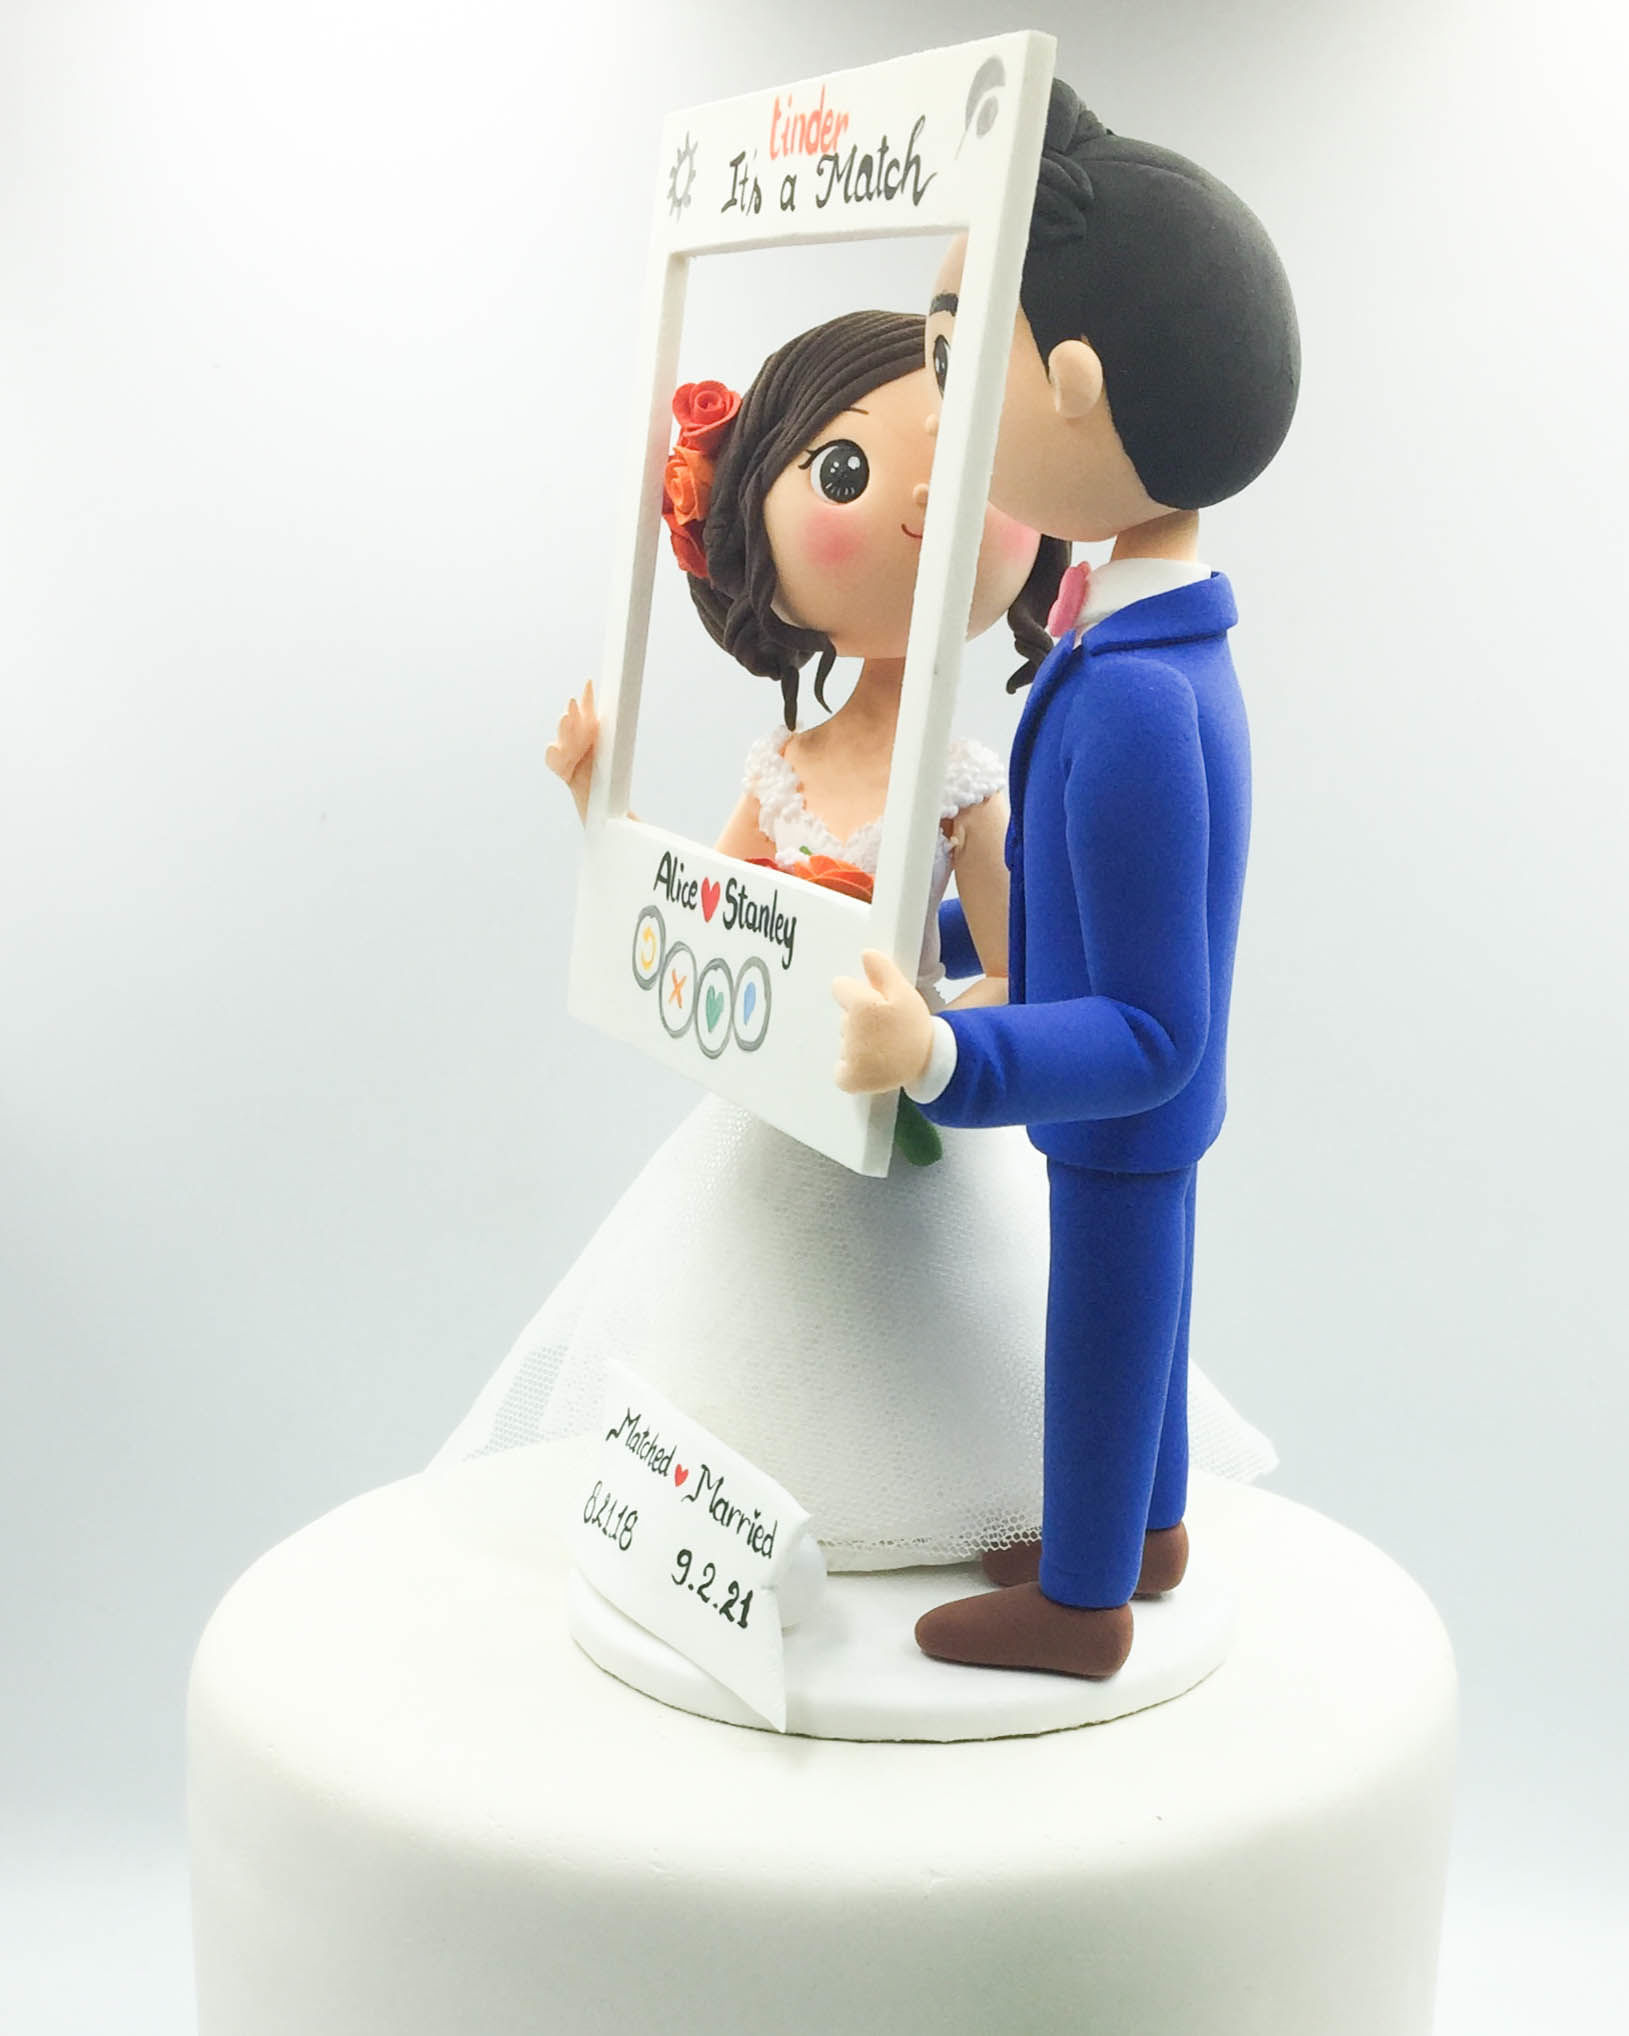 https://www.worldcaketopper.com/images/thumbs/0004296_online-dating-wedding-cake-topper-tinder-bride-groom-topper.jpeg